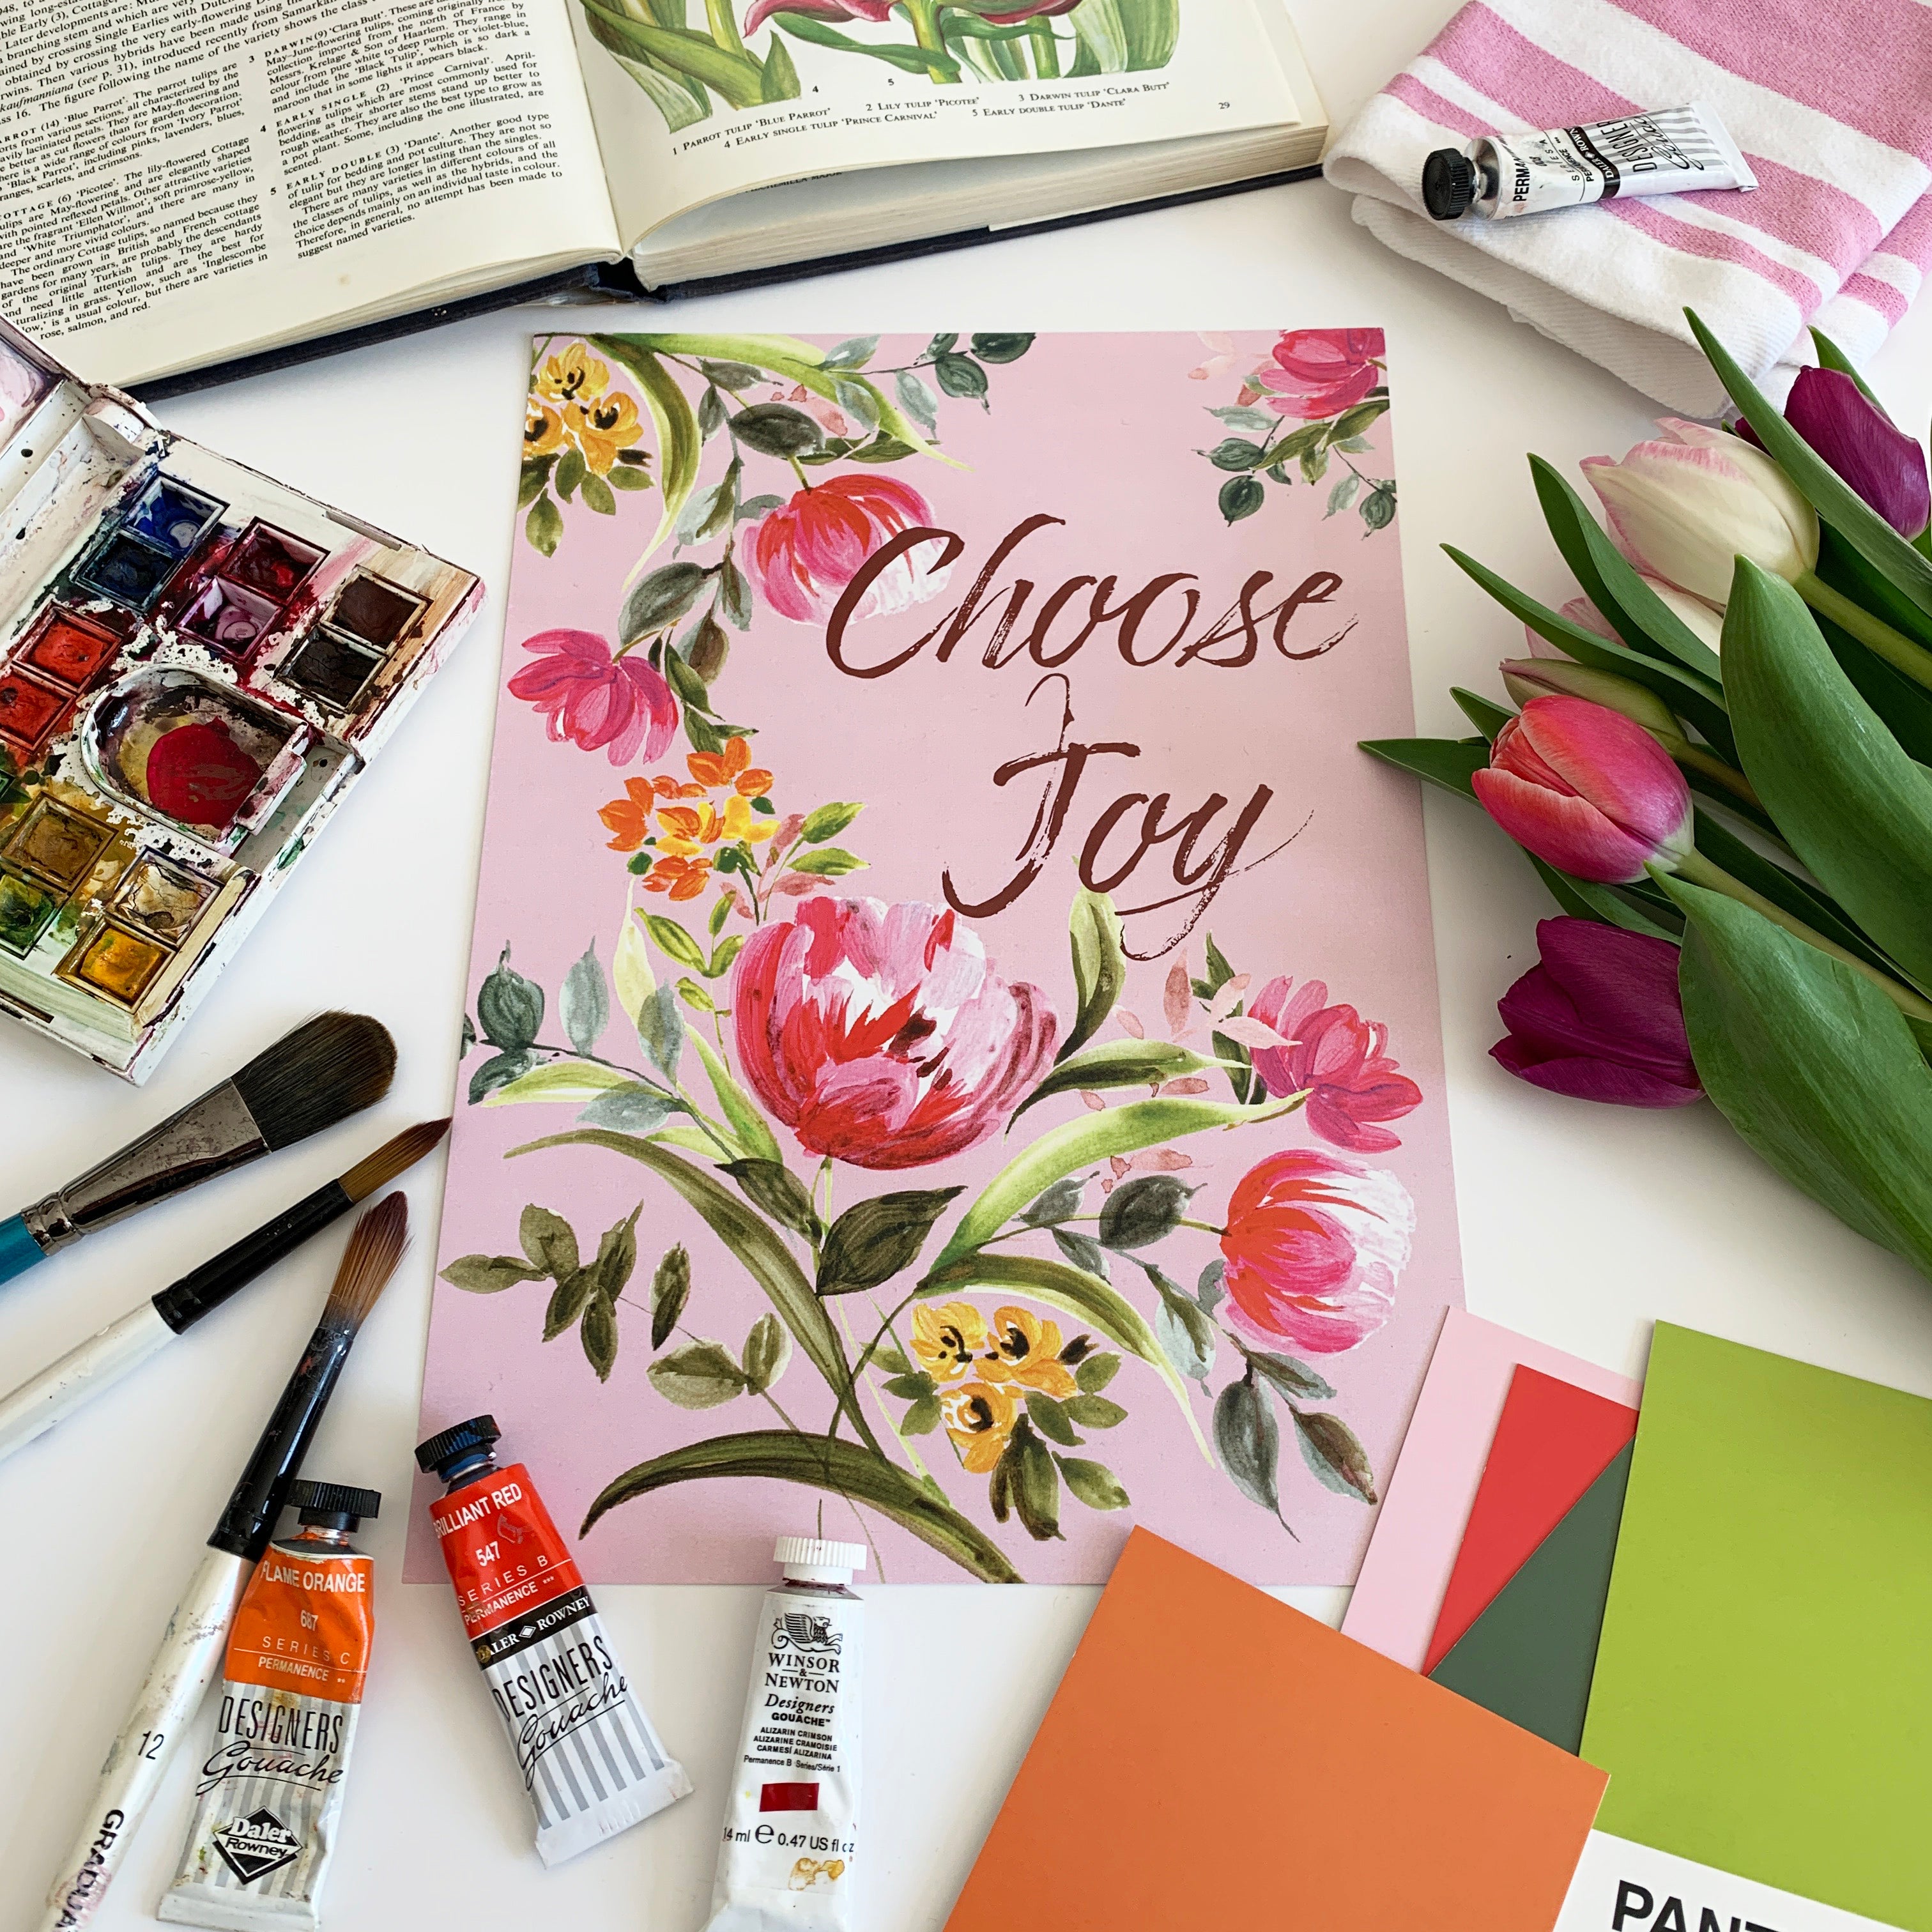 REDUCED** A4 CHOOSE JOY floral inspirational art print. Free UK Postage